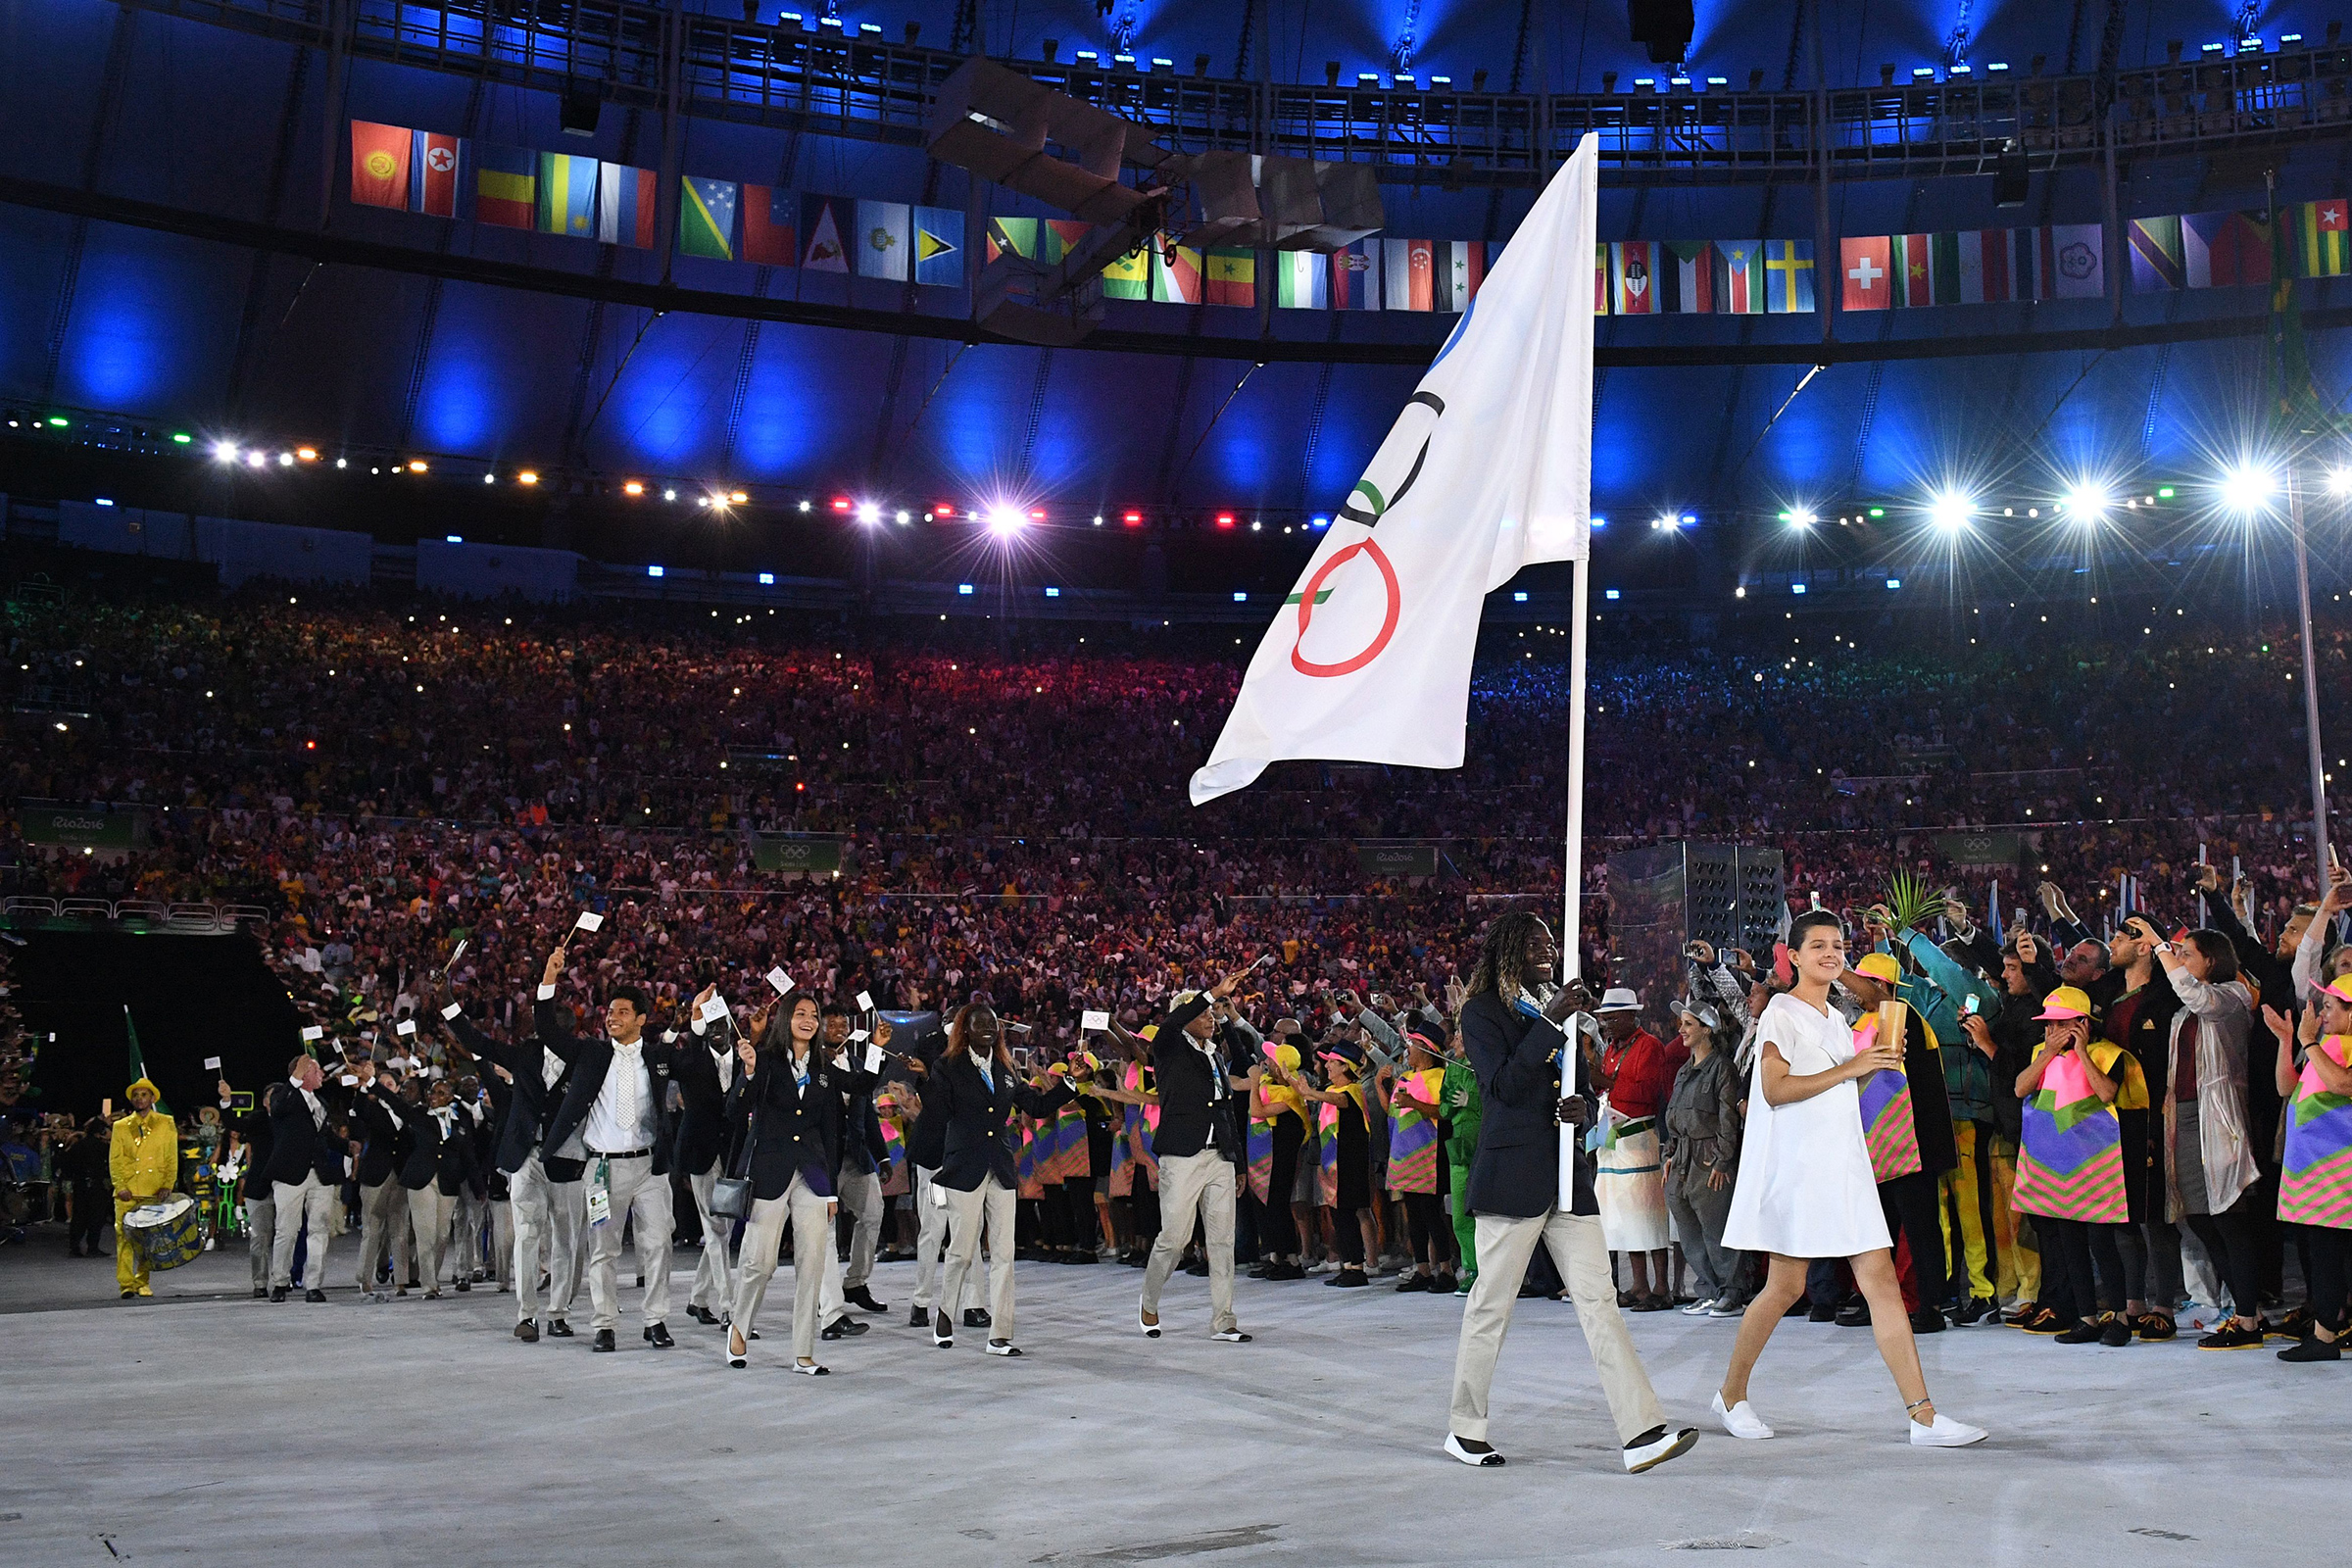 Rose Nathike Lokonyen carries the Olympic flag